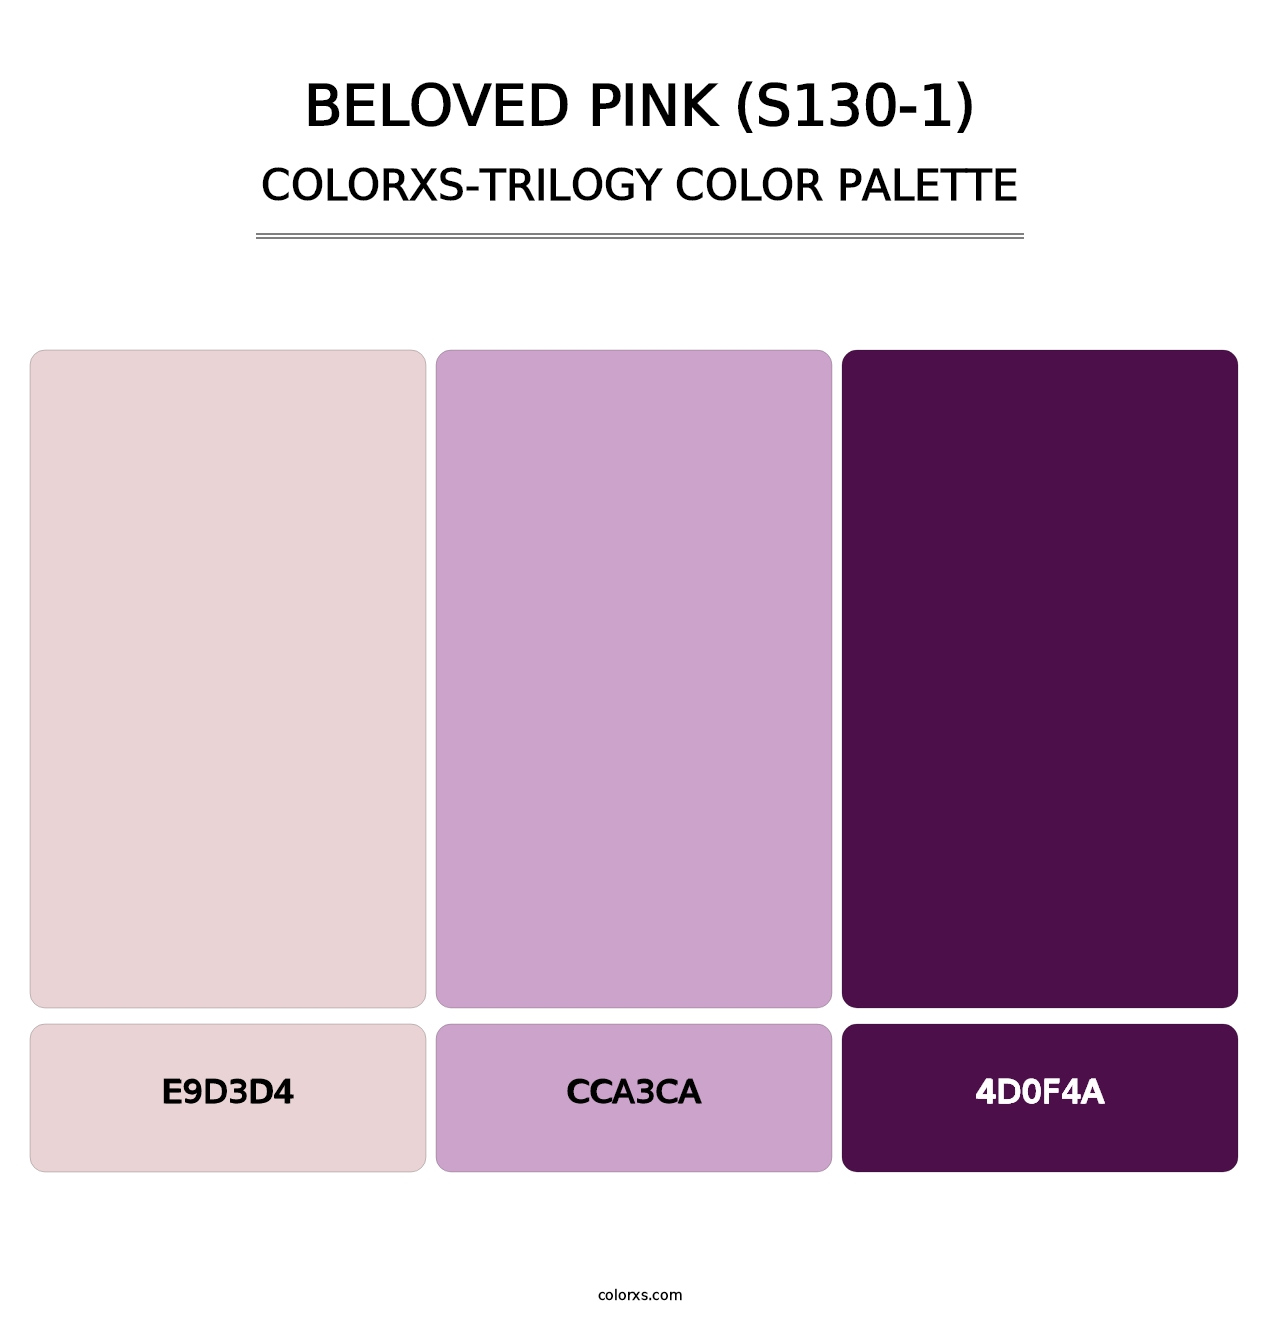 Beloved Pink (S130-1) - Colorxs Trilogy Palette